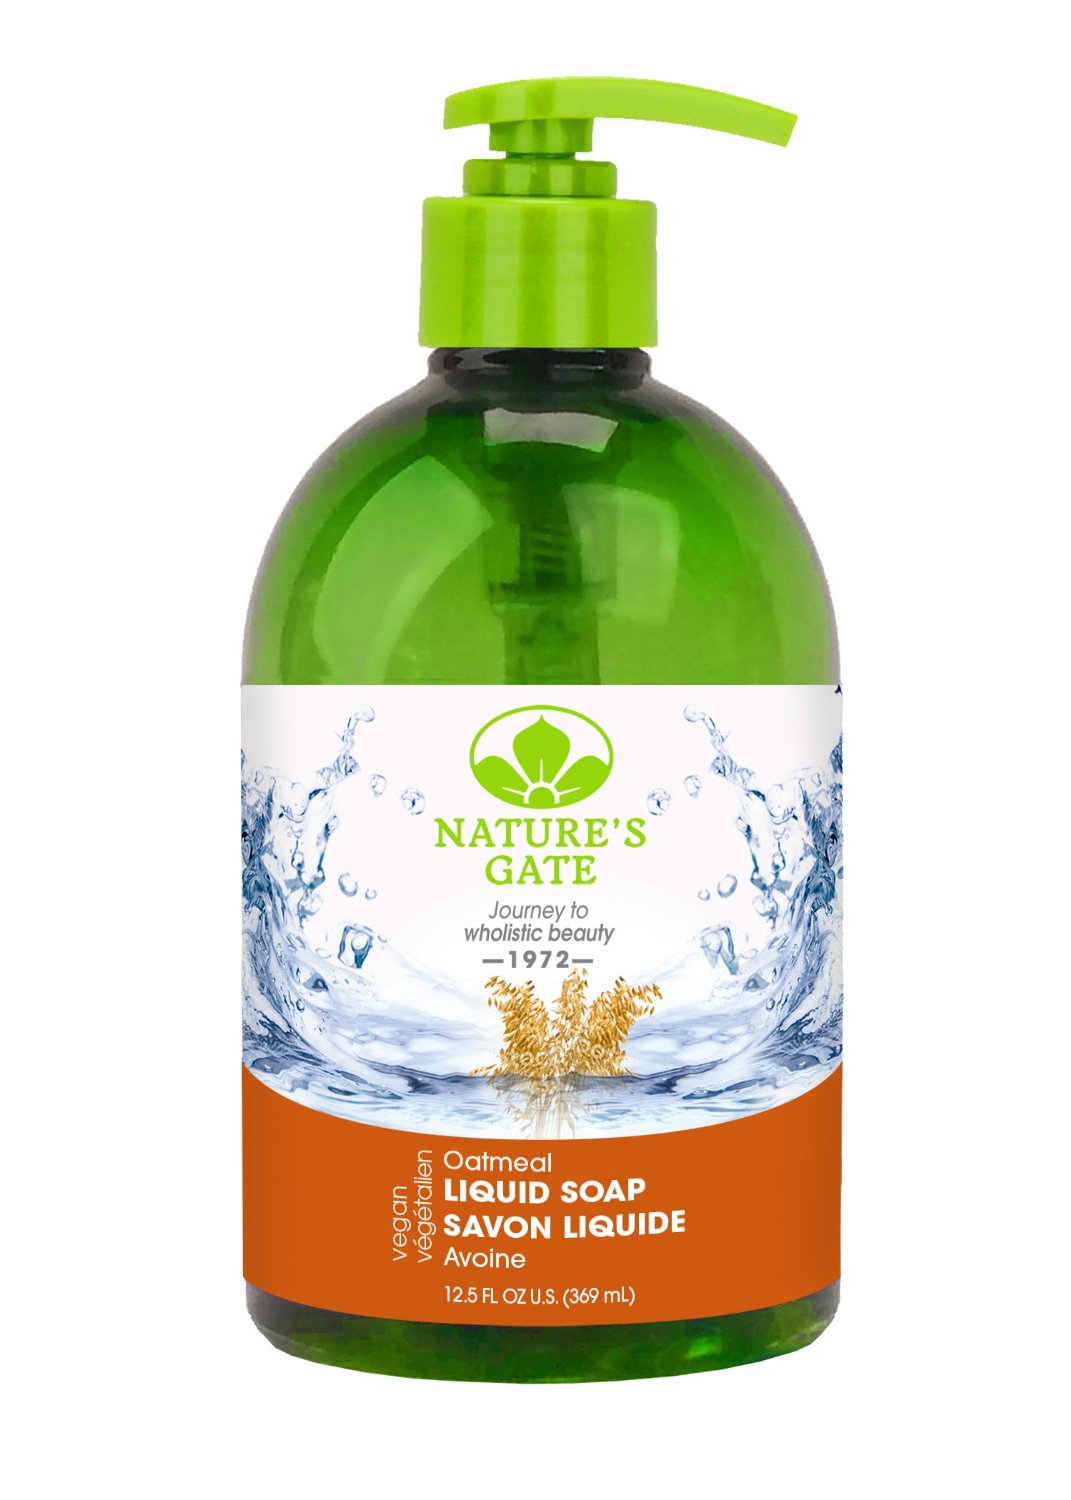 NATURE'S GATE: Oatmeal Liquid Soap 12.5 fl oz